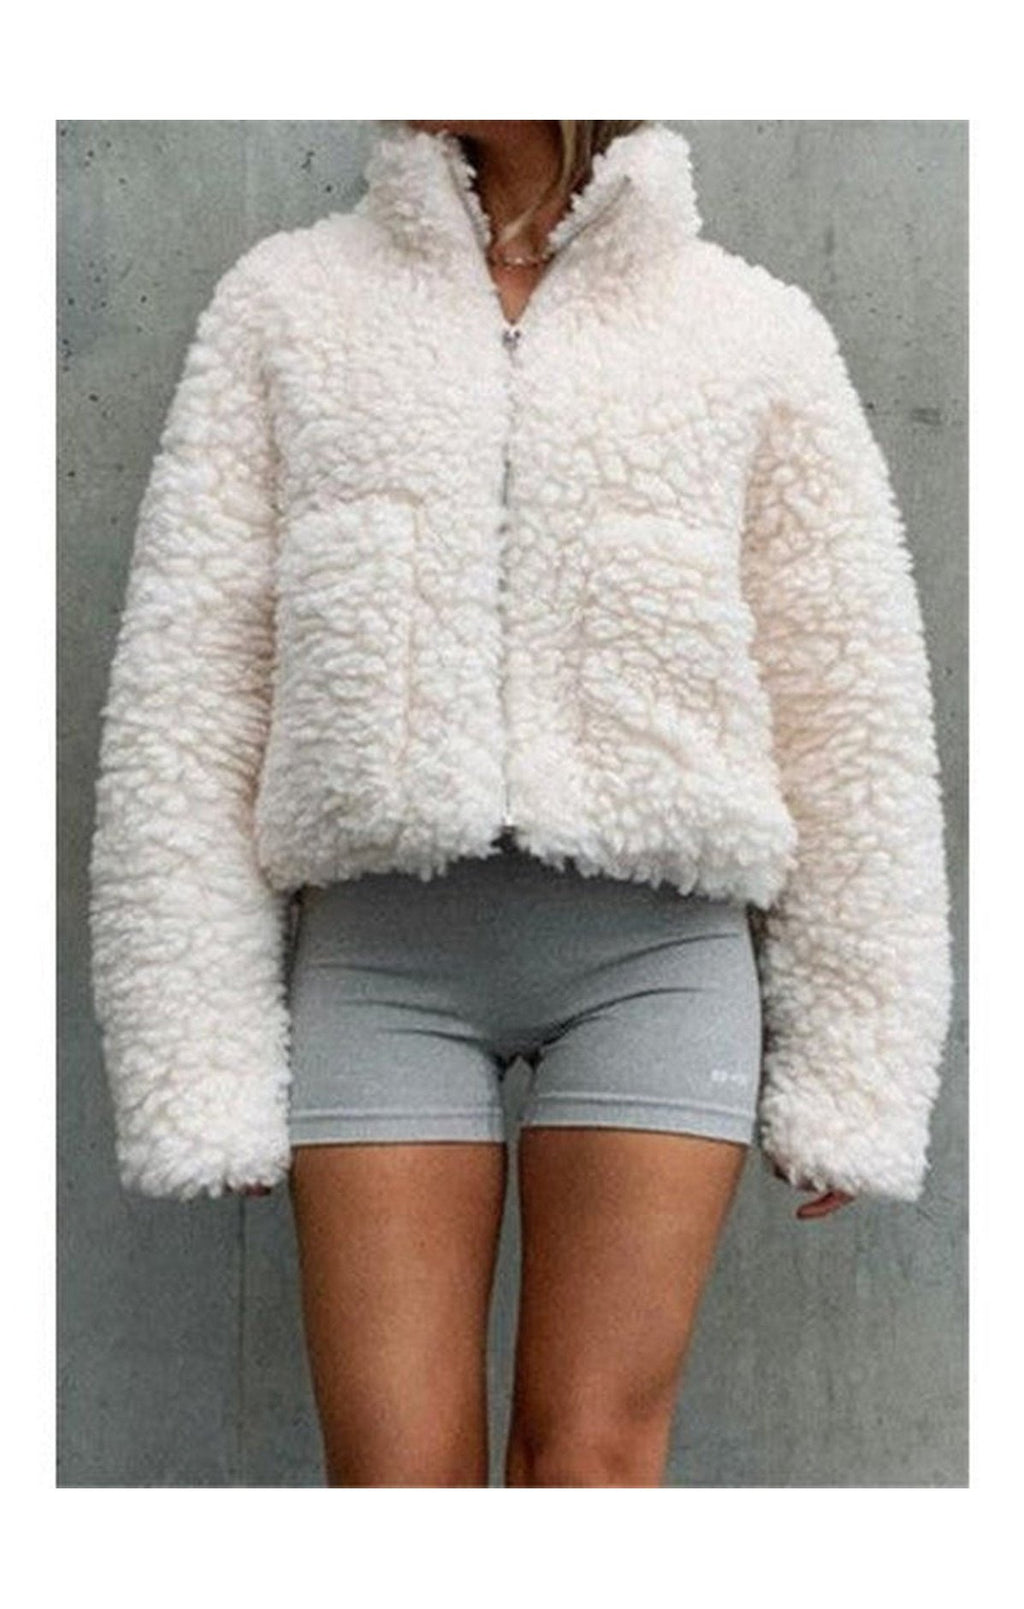 Coats Winter solid color velvet stretch high-neck zip-up pockets stylish casual jacket Coat